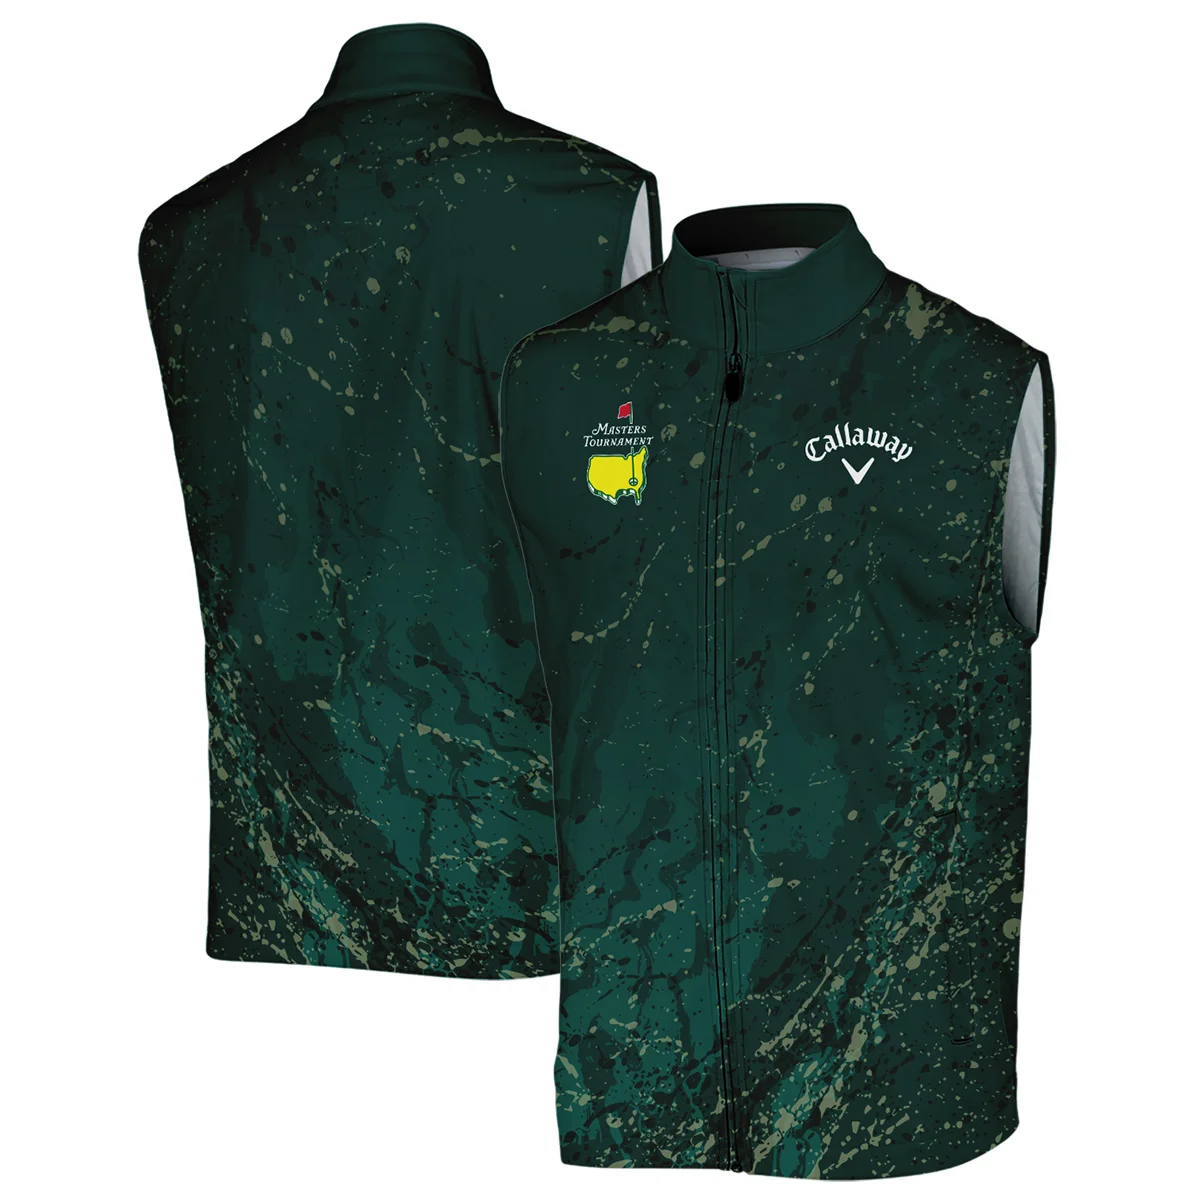 Old Cracked Texture With Gold Splash Paint Masters Tournament Callaway Unisex Sweatshirt Style Classic Sweatshirt